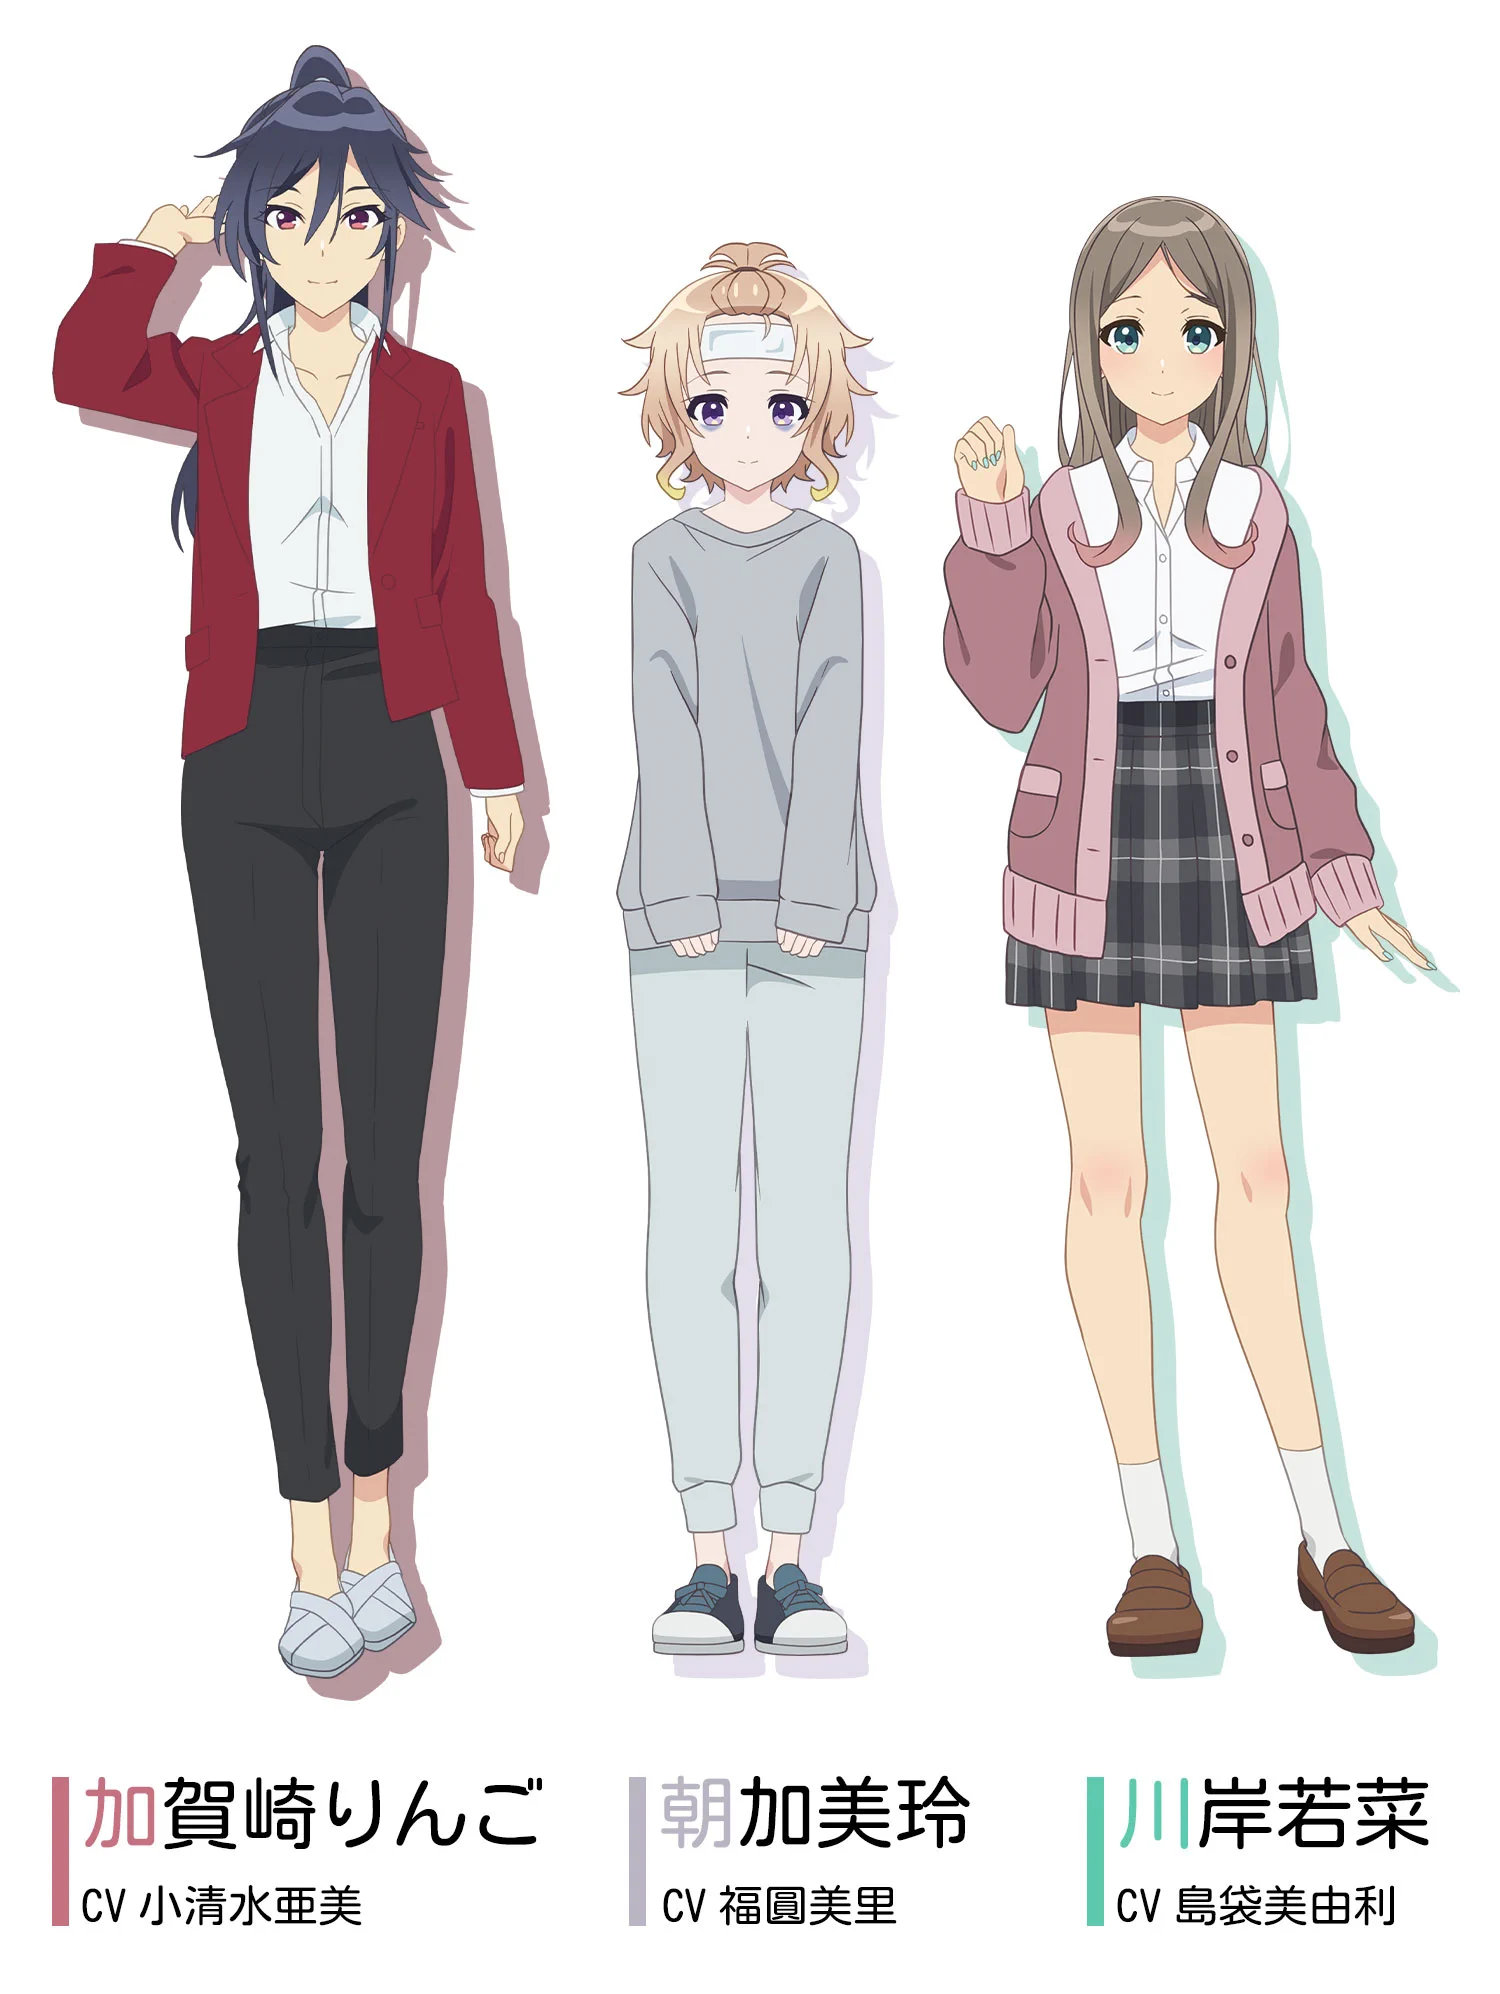 New Seiyu Radio Anime Premieres in Japan: Ami Koshimizu, Misato Fukuen, and Miyuri Shimabukuro Join Forces in CONNECT's 'The Many Sides of Voice Actor Radio'